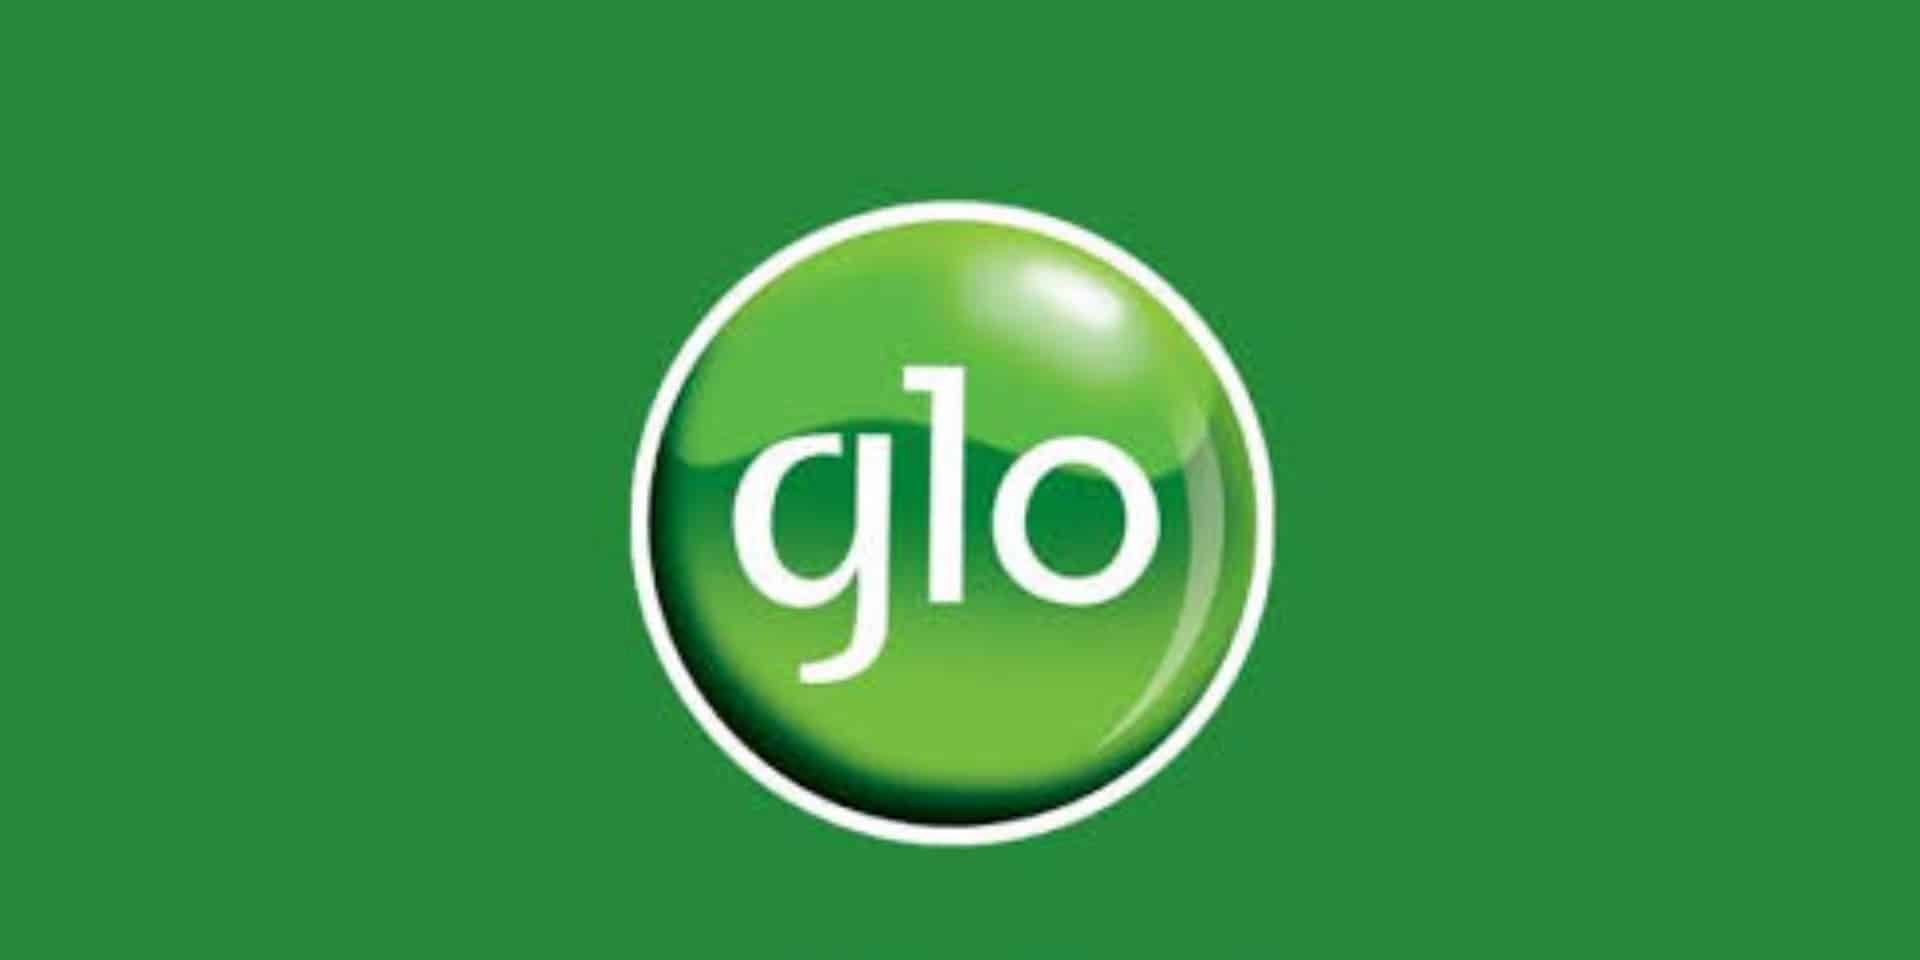 How to check Glo balance